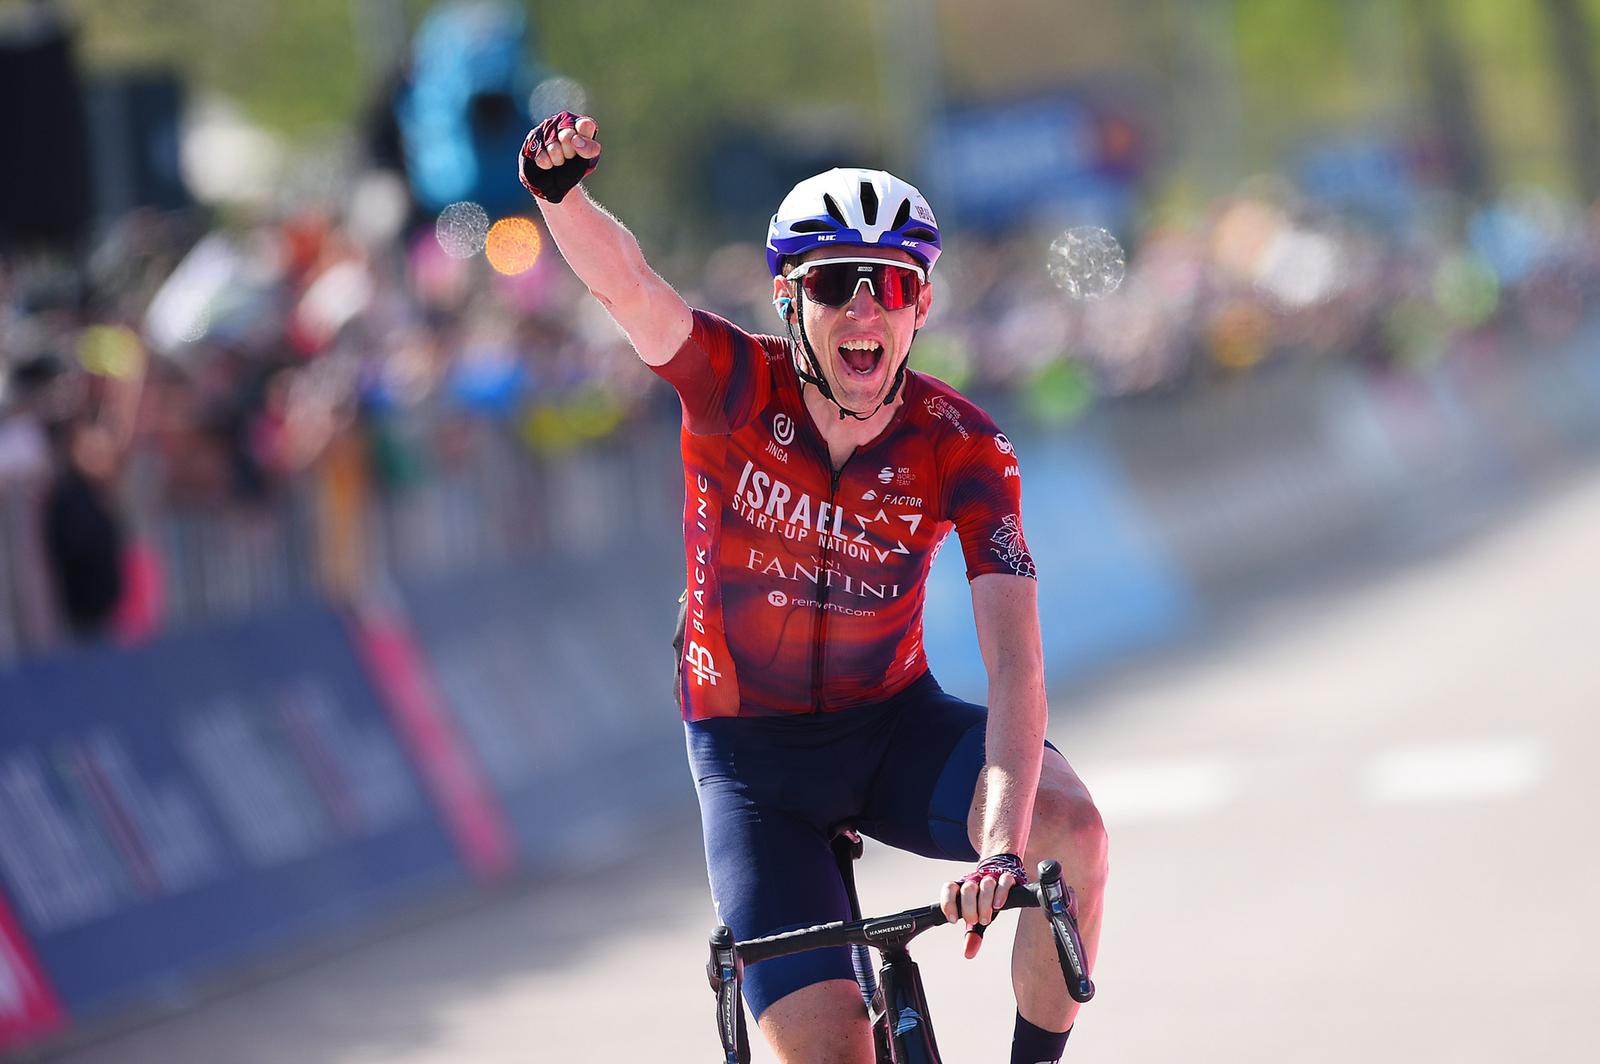 Video: WINNING GIRO STAGE 17 – Nervousness and excitement | Dan Martin in the Giro d’Italia